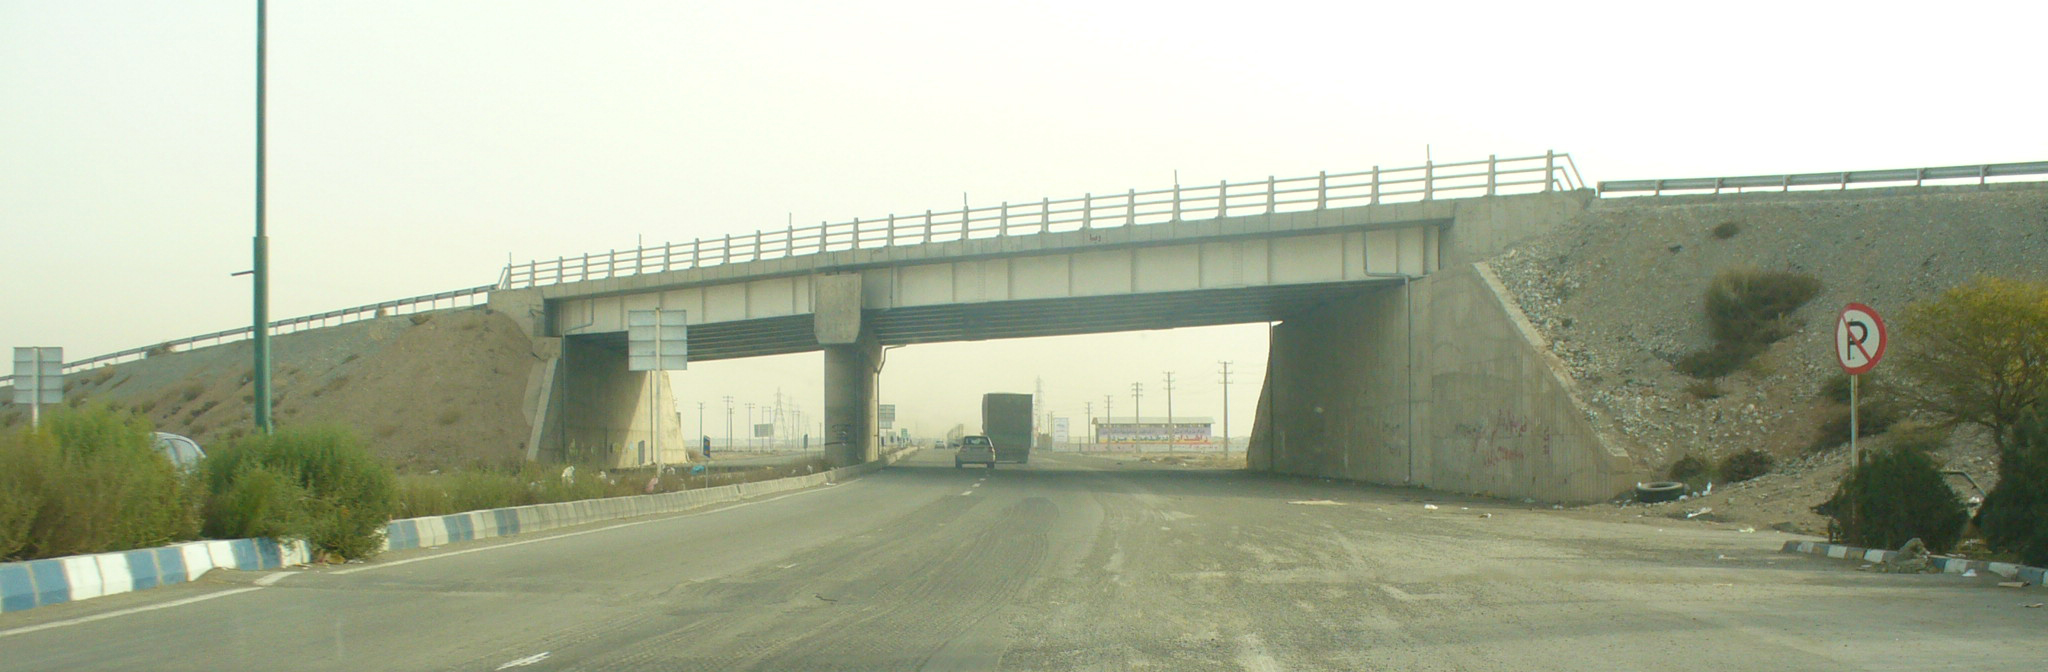 Construction and modernization of the Shahriyar-Ashtar highway